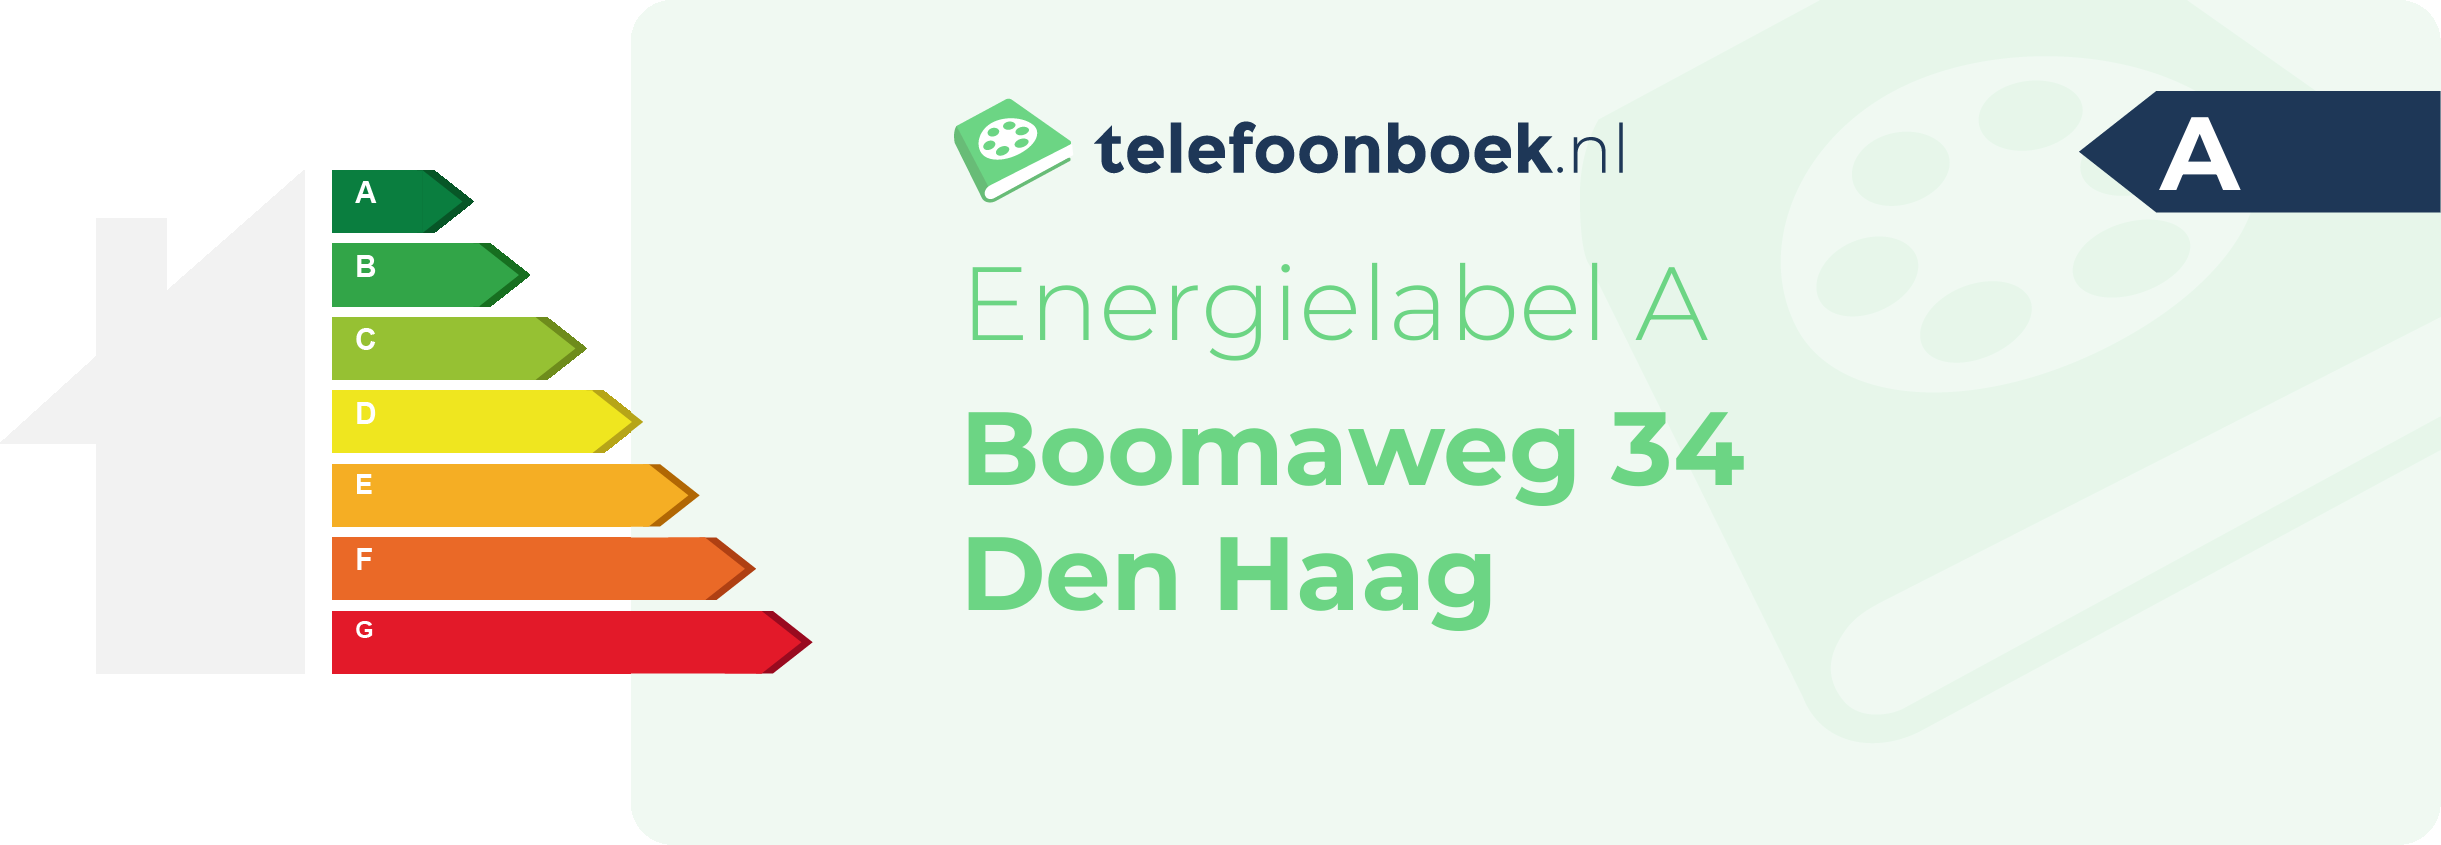 Energielabel Boomaweg 34 Den Haag